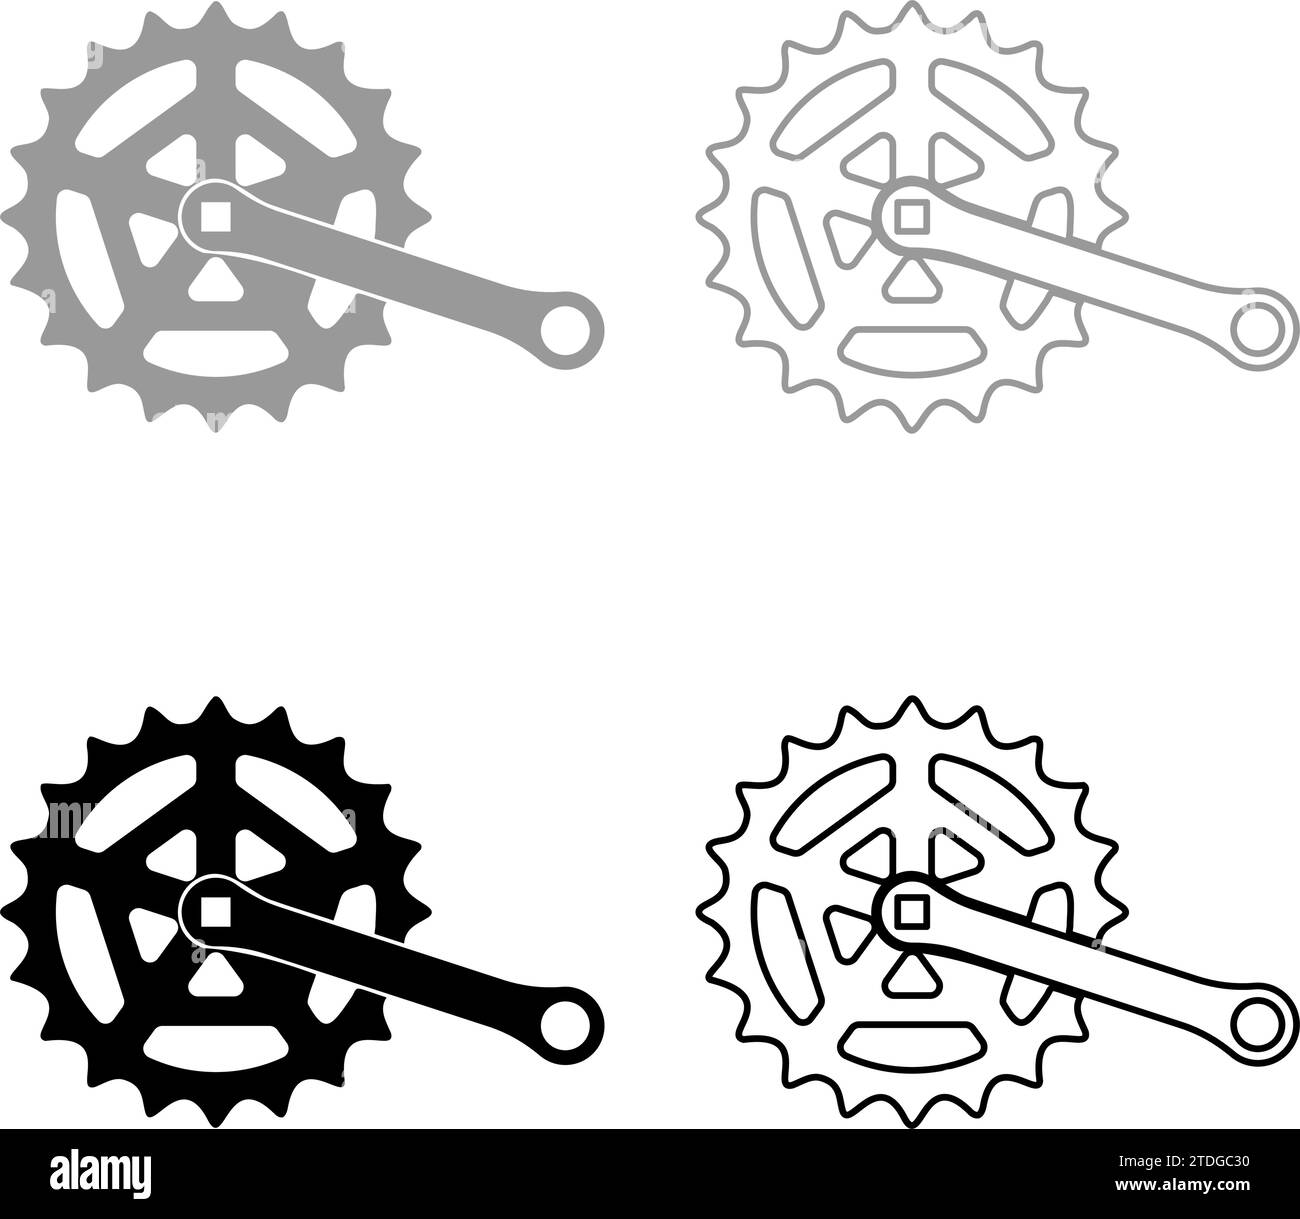 Crankset cogwheel sprocket crank length with gear for bicycle cassette system bike set icon grey black color vector illustration image simple solid Stock Vector